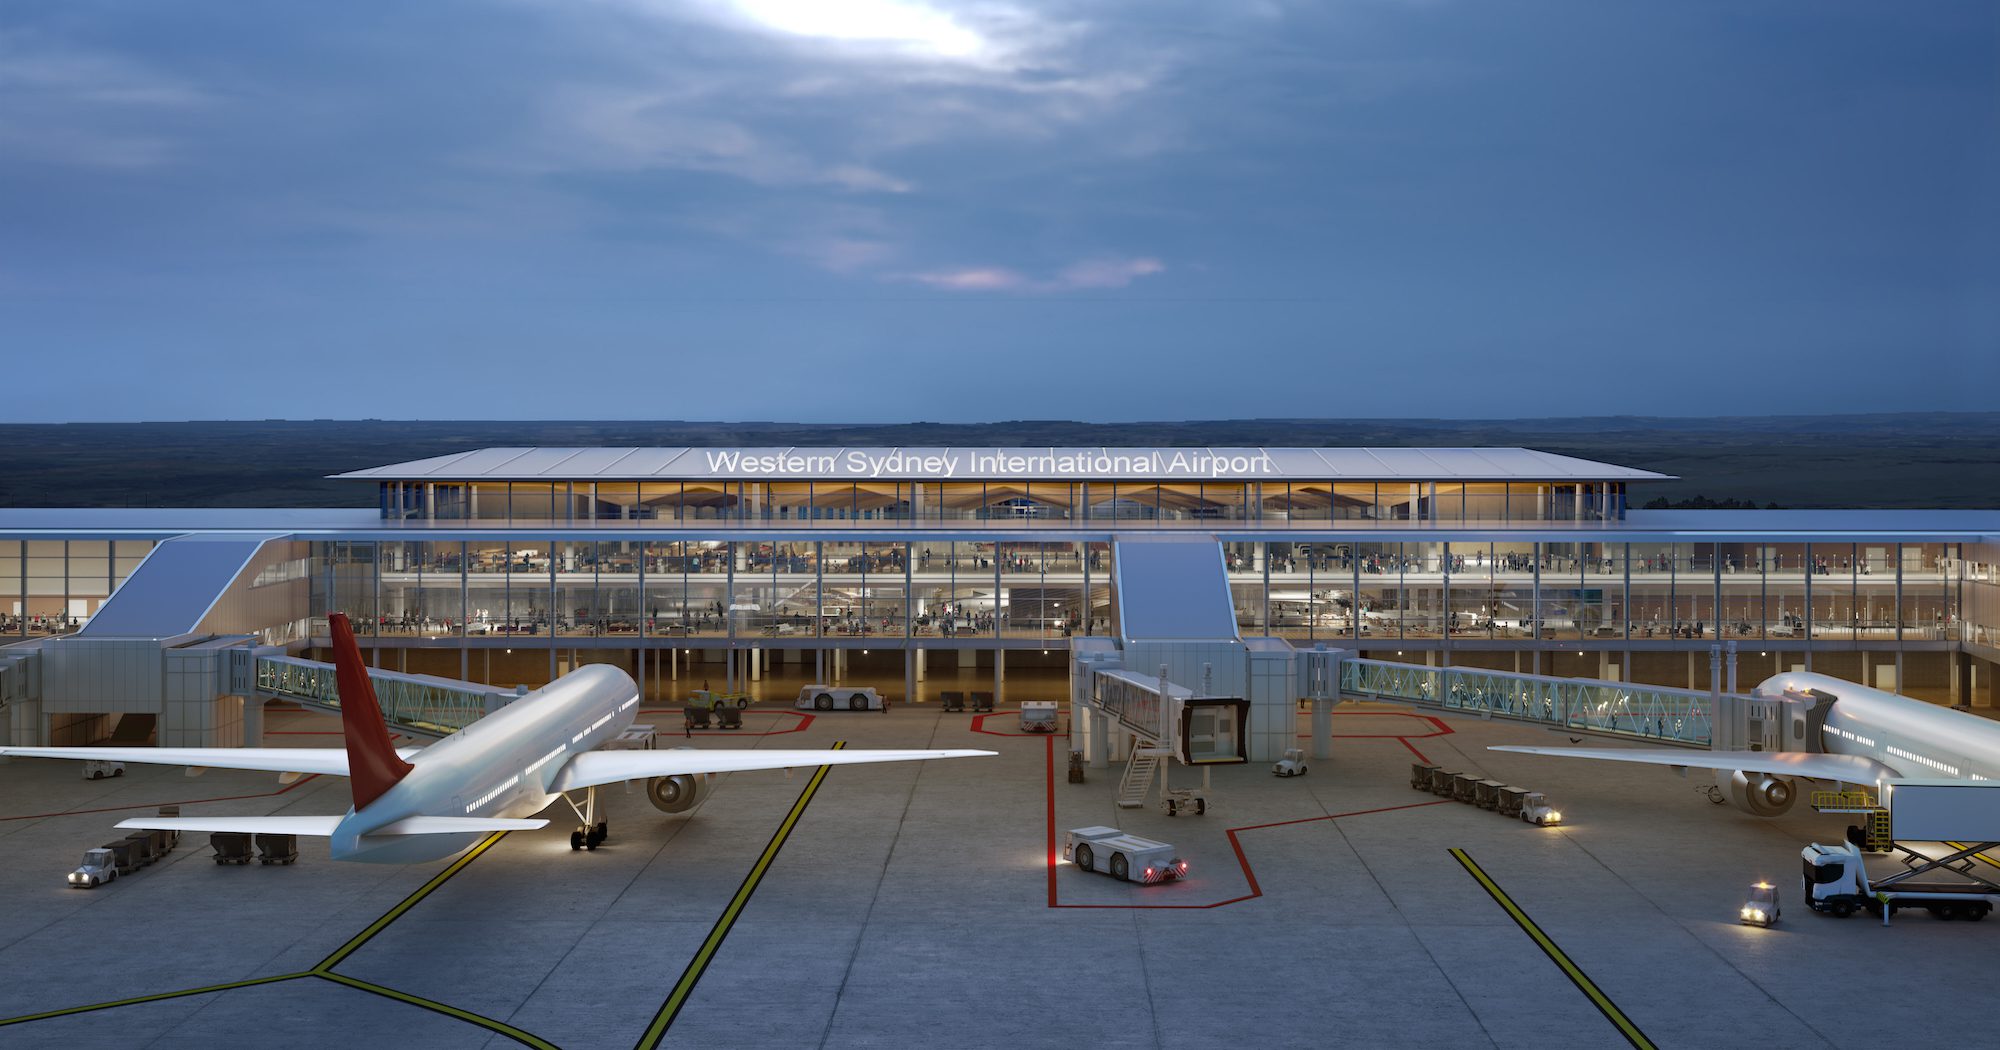 The future Western Sydney International Airport.